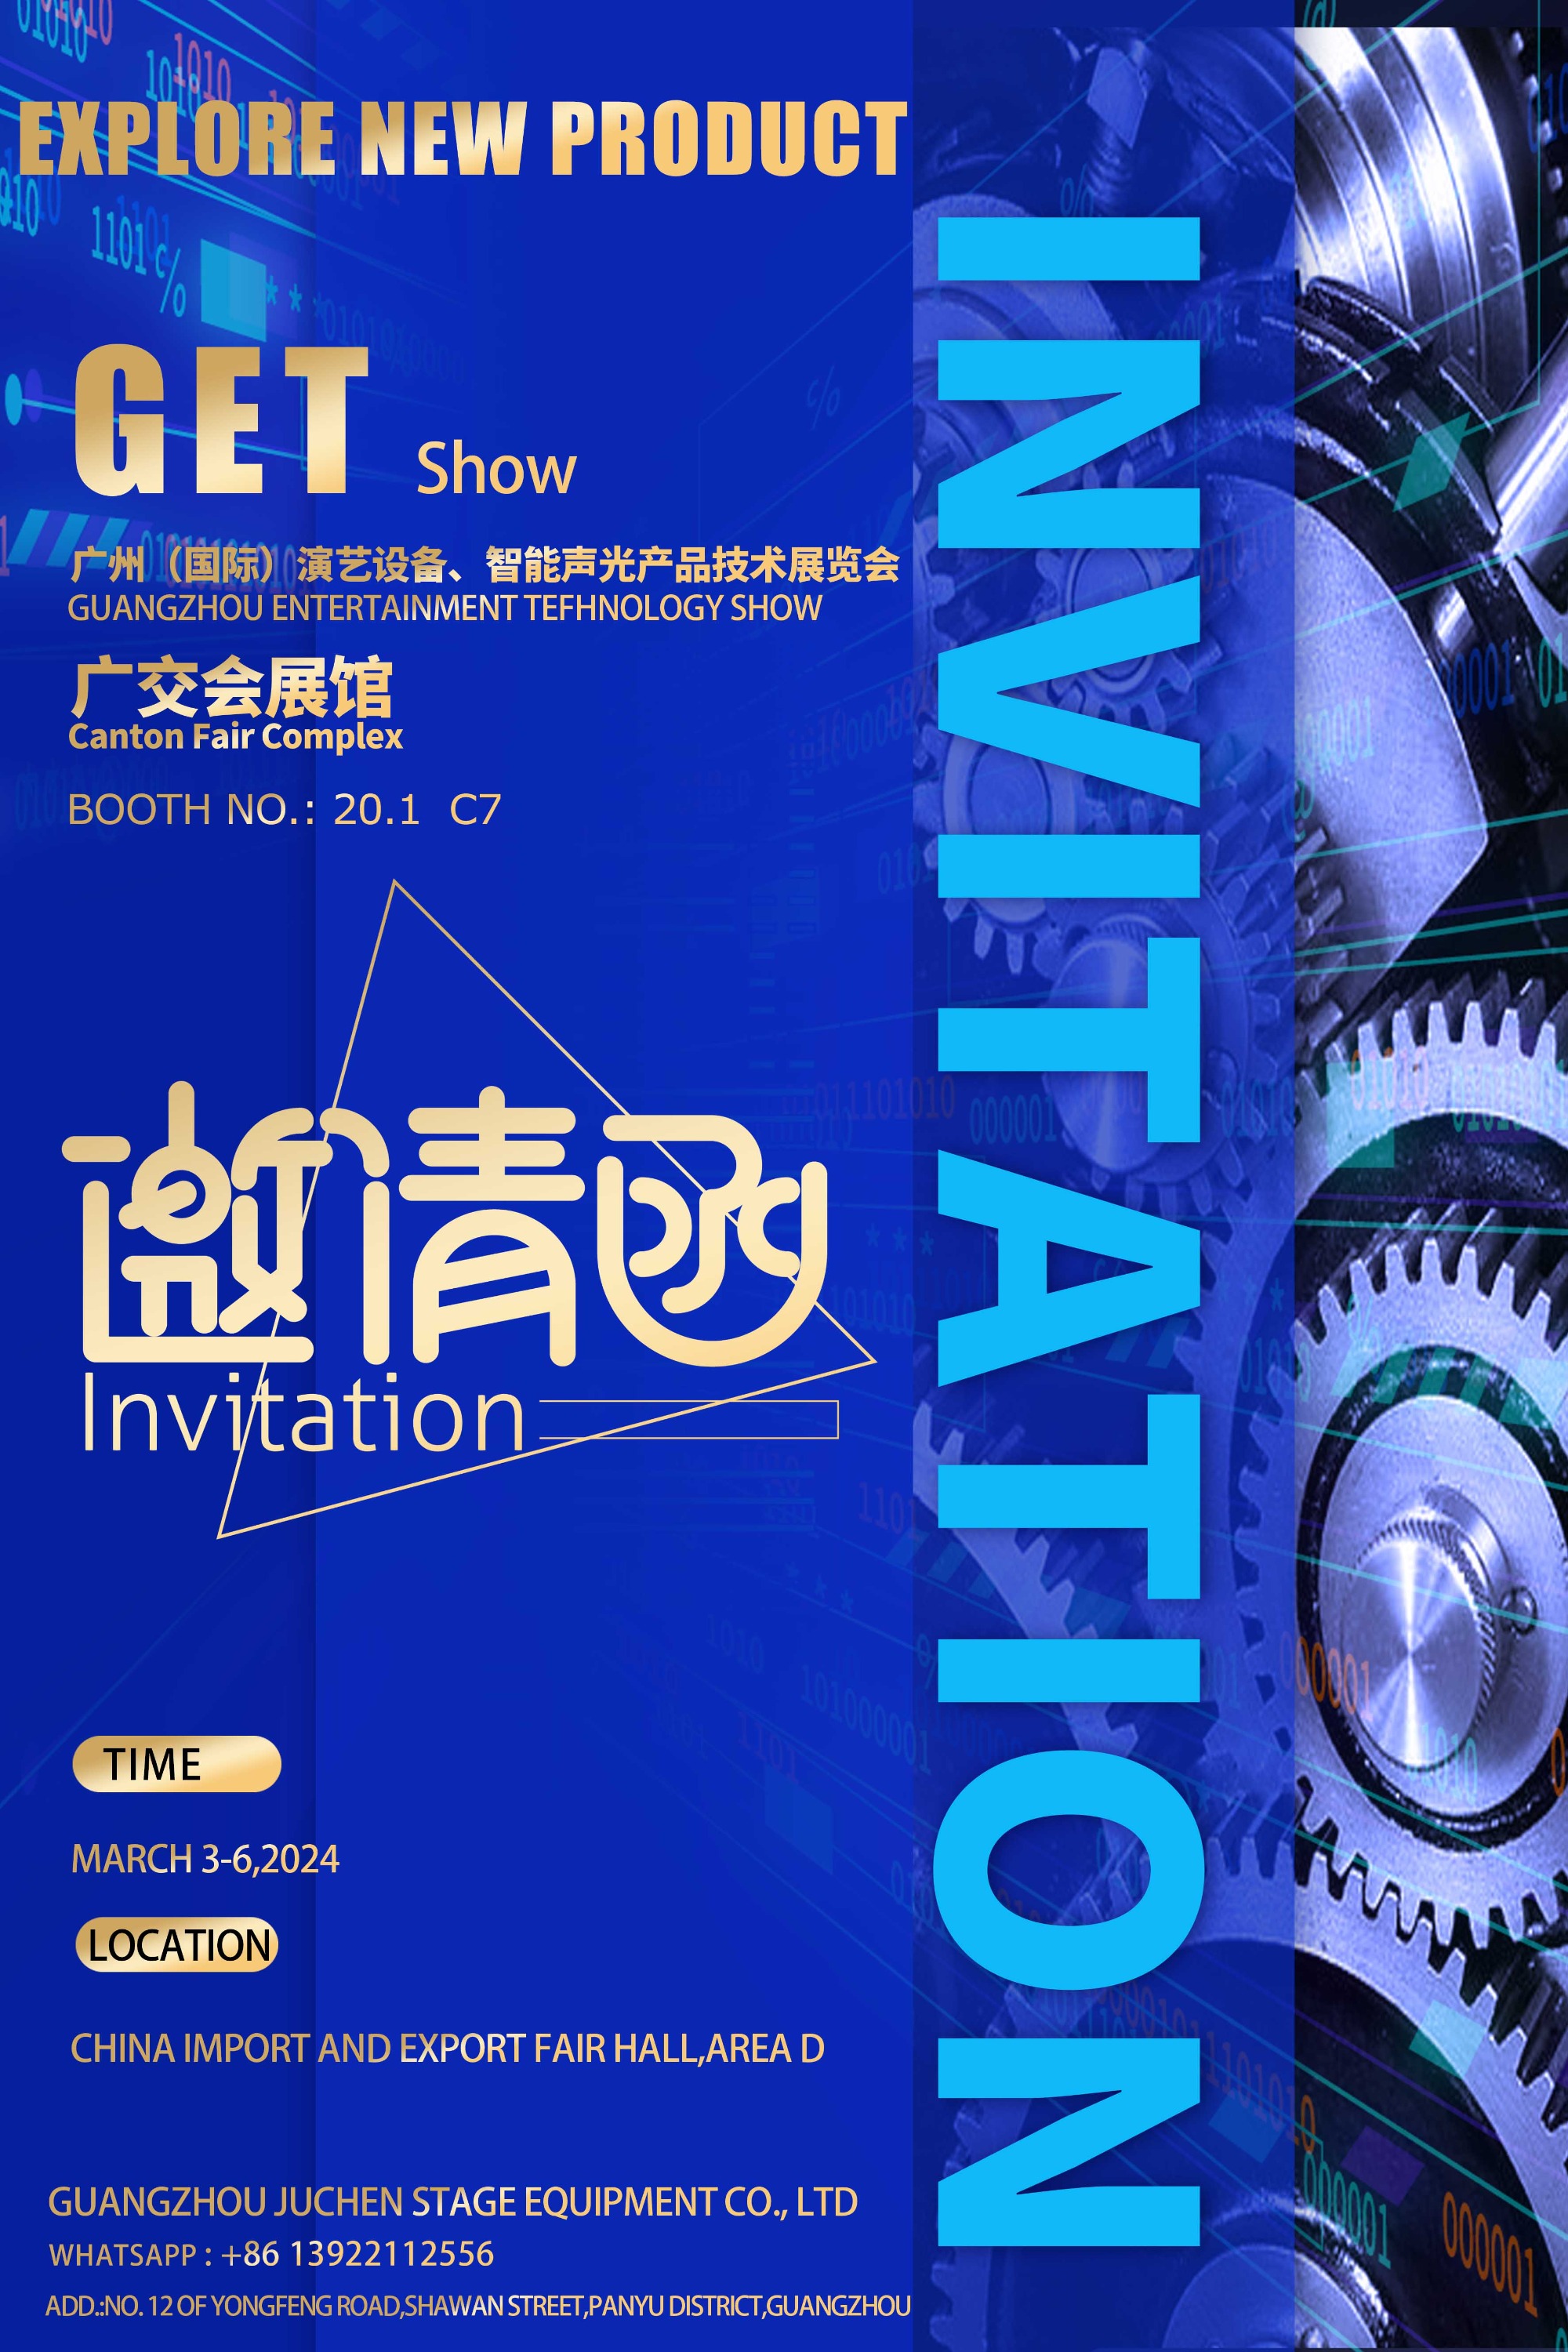 Get show invitation March 3-6,2024